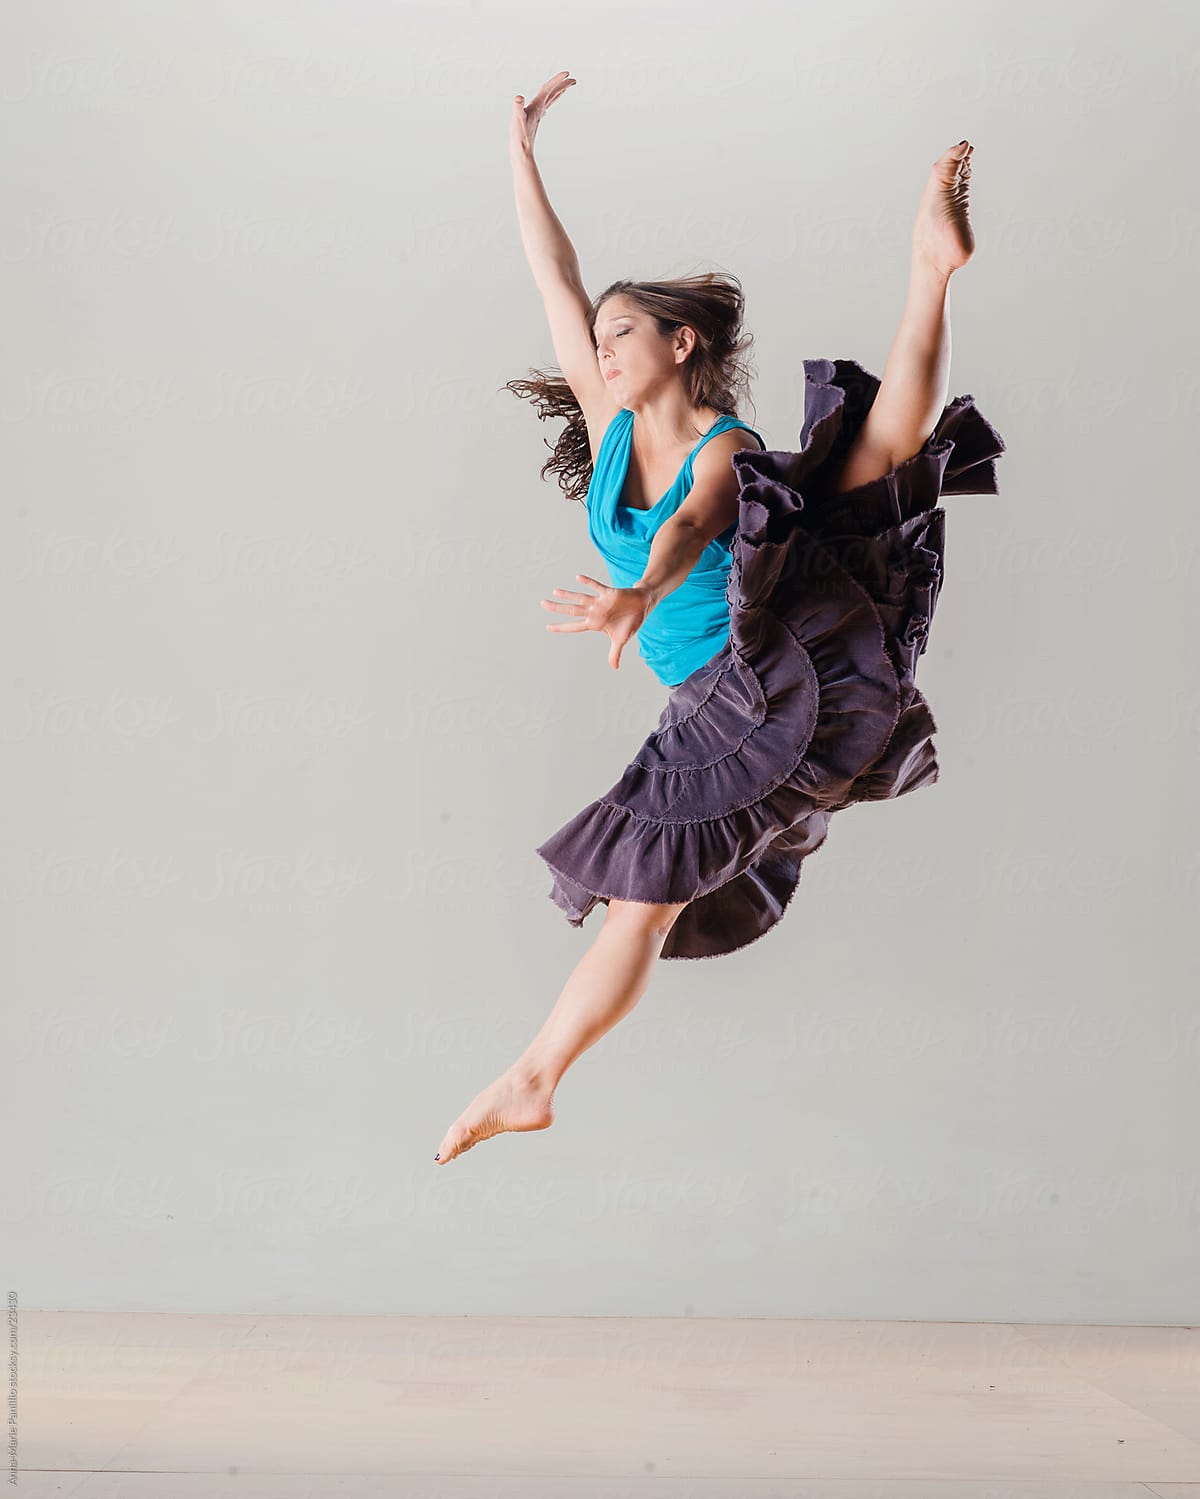 Split leap dancer